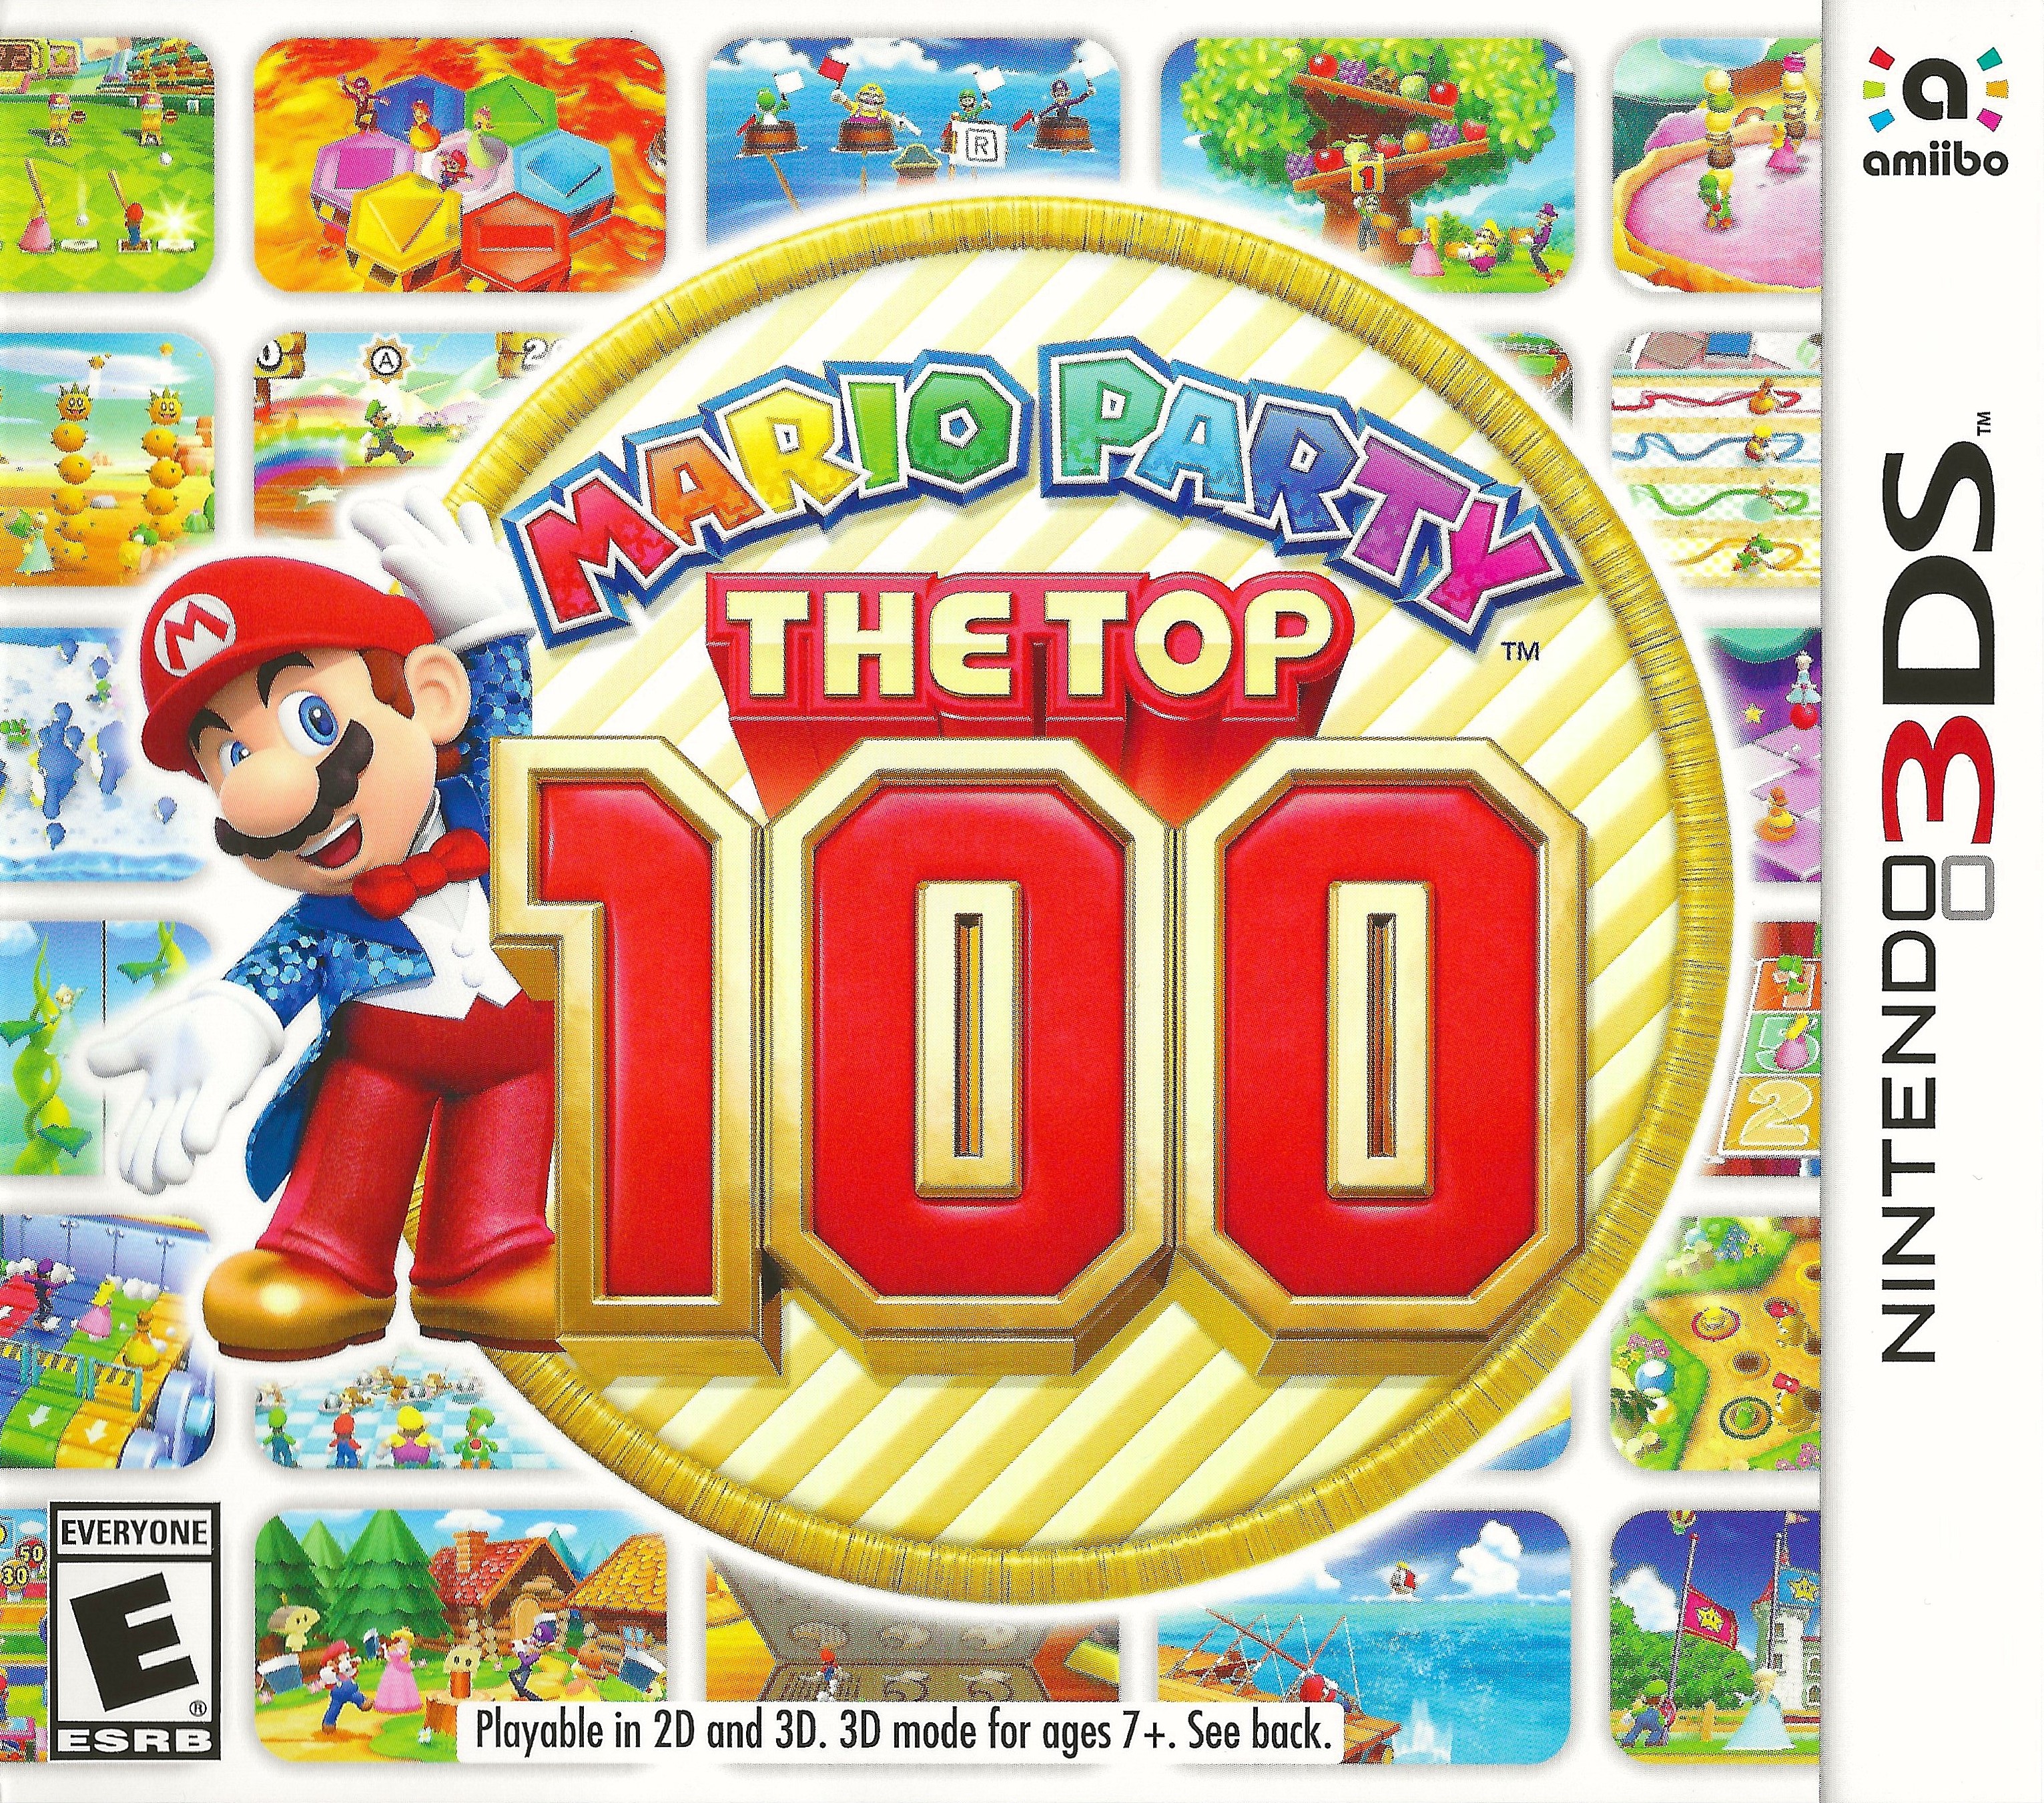 'Mario Party: The Top 100'